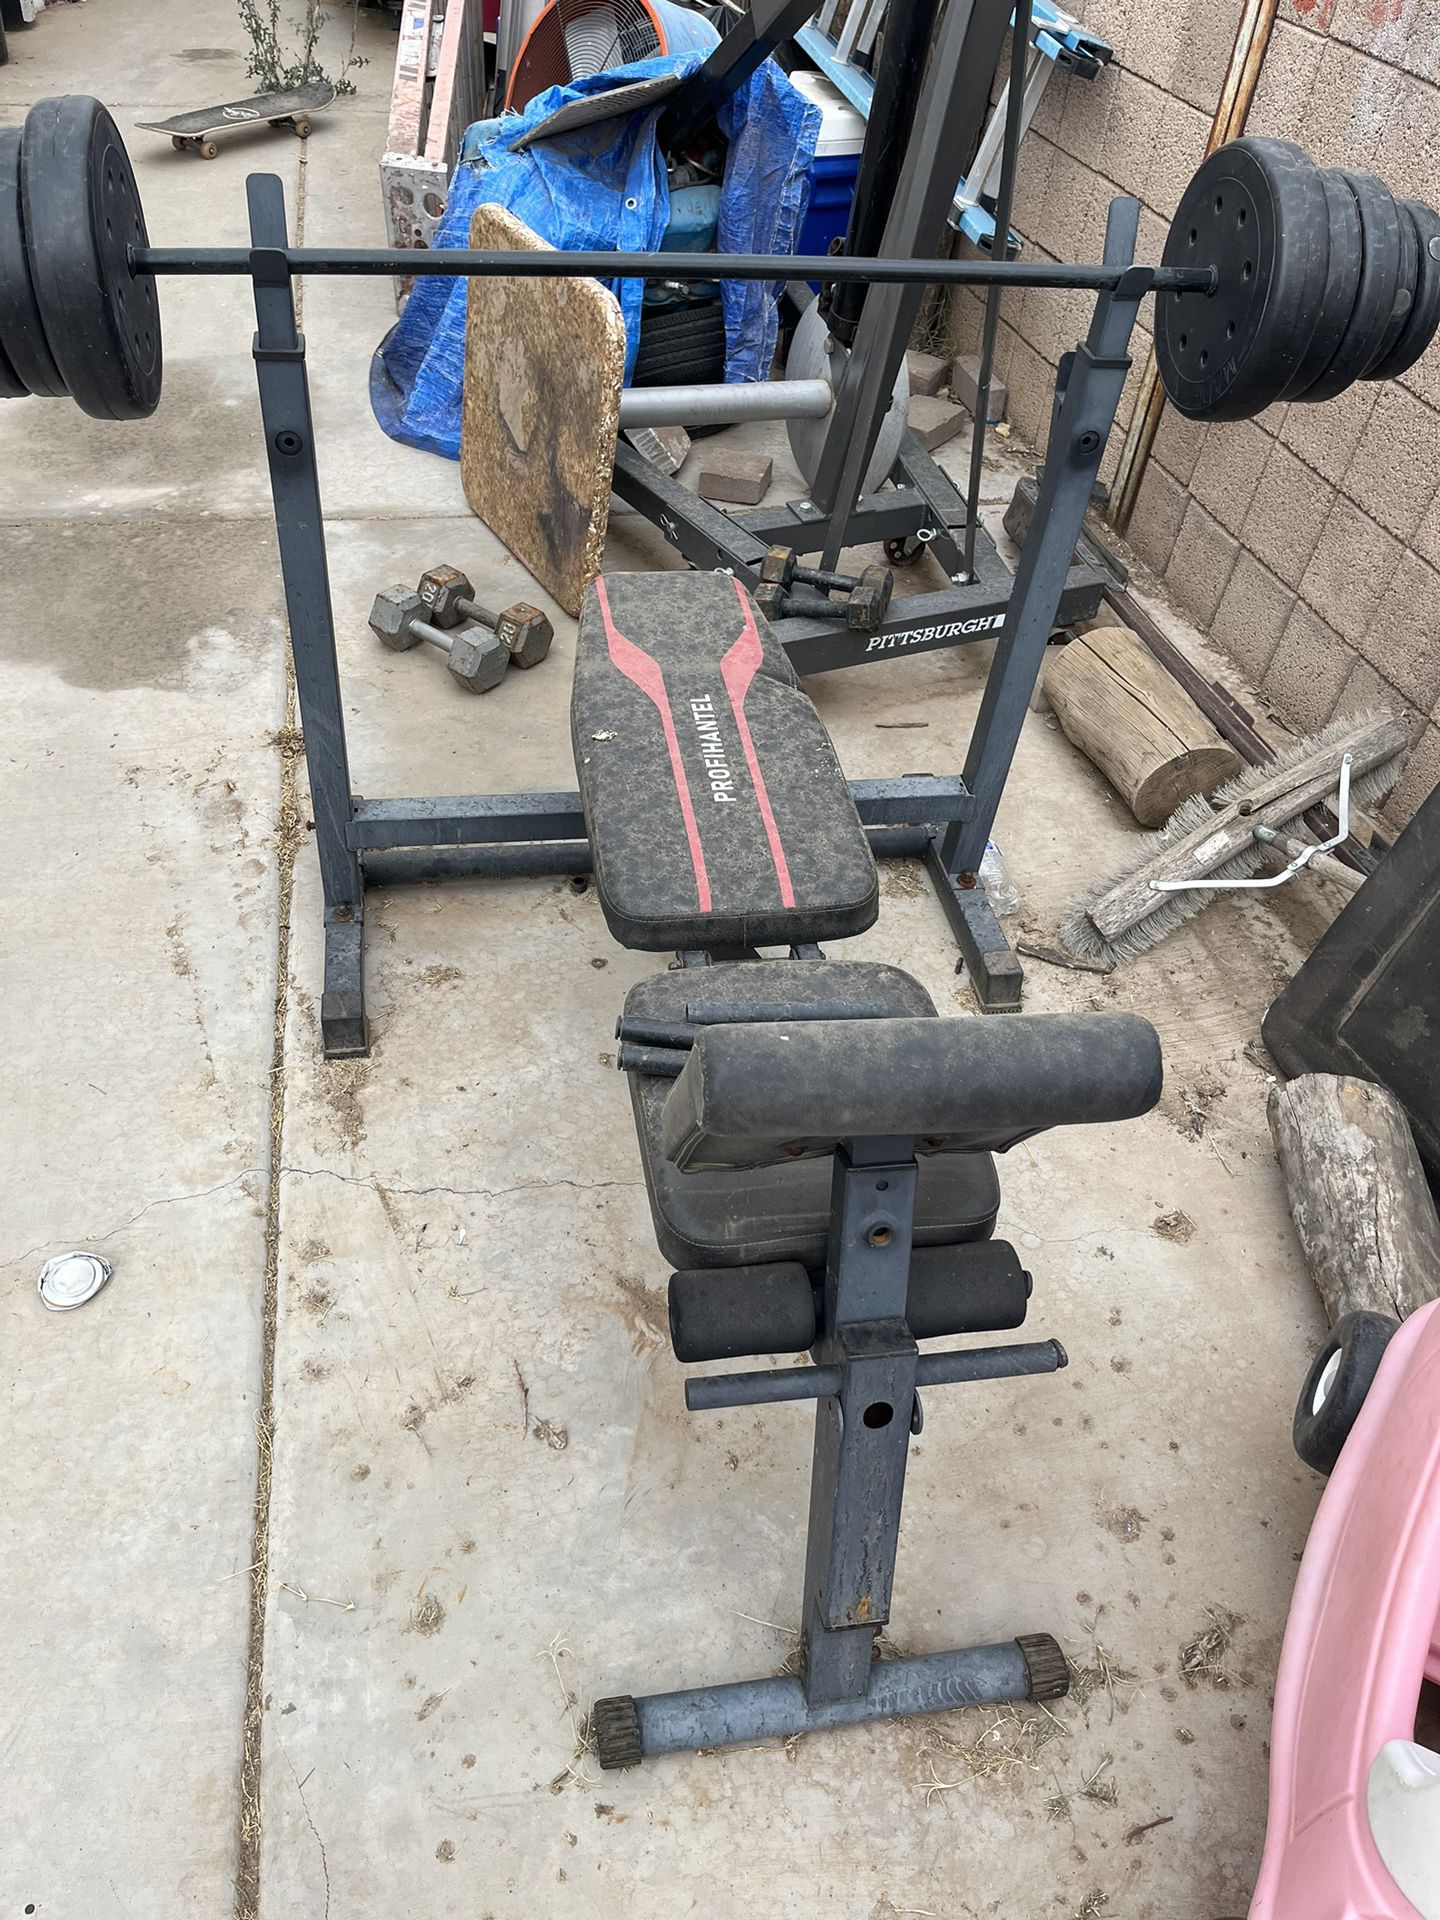 Weights/bench